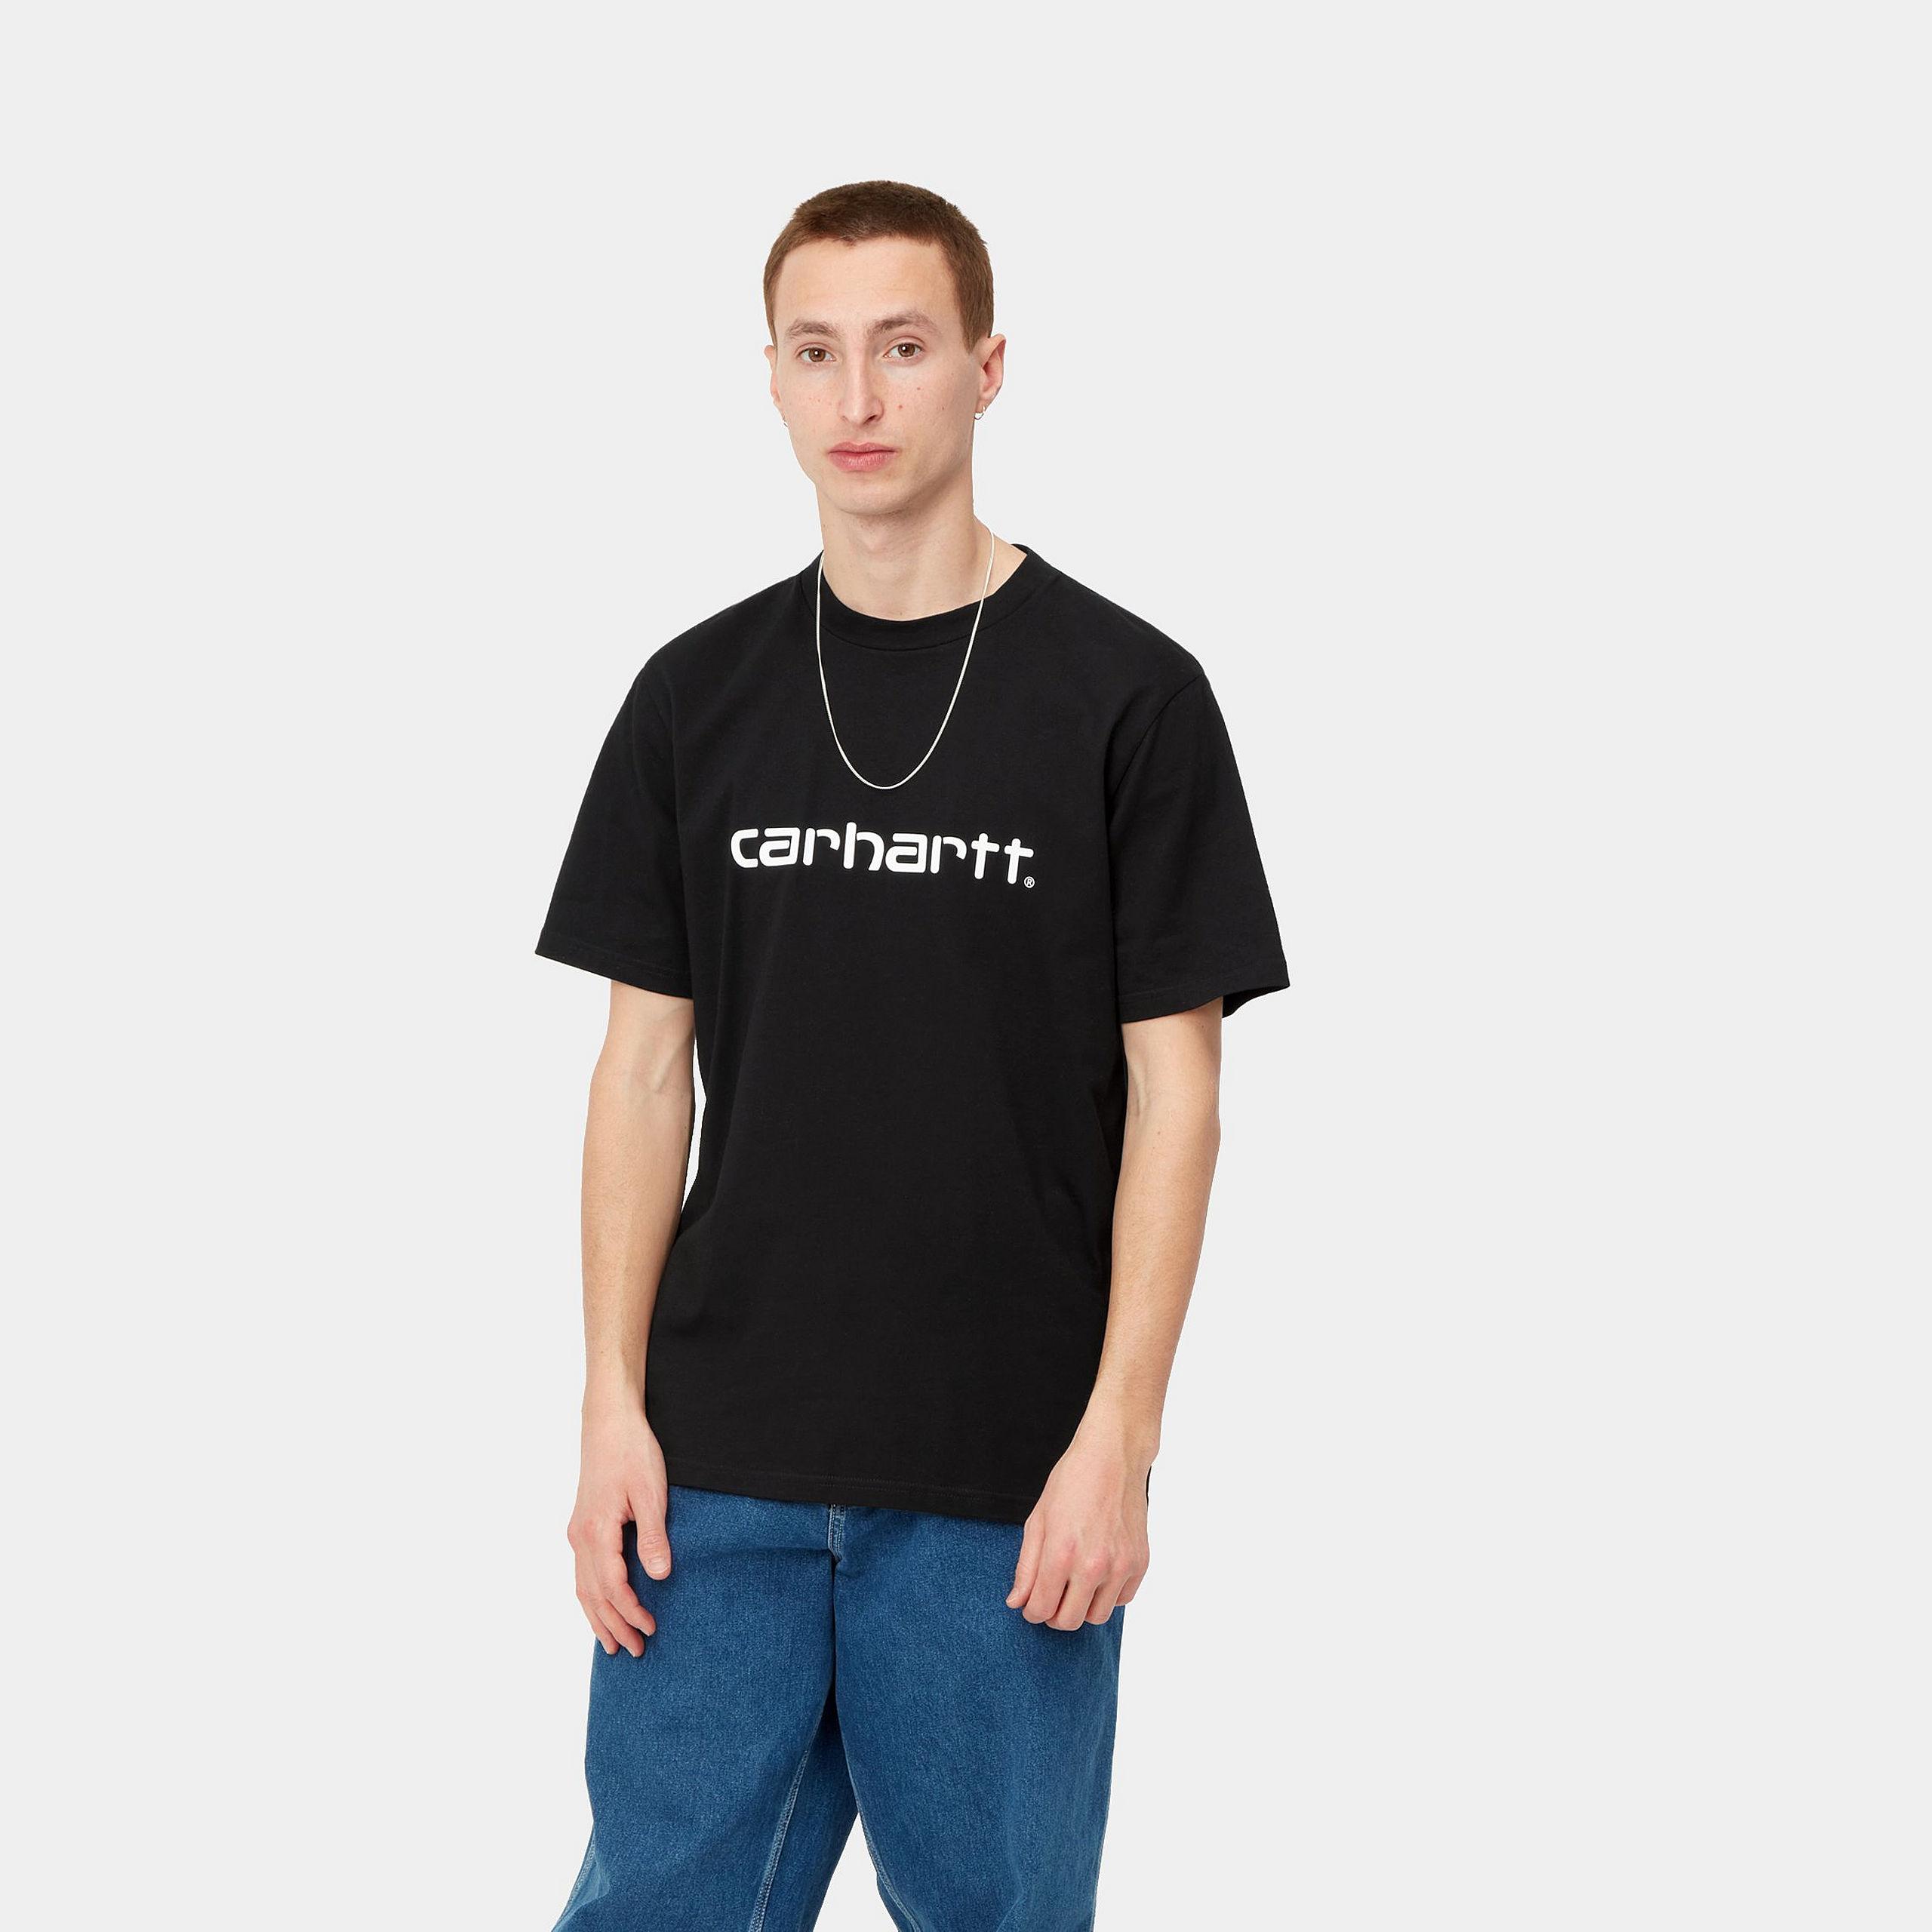 S/S Script T-Shirt Black / White CARHARTT